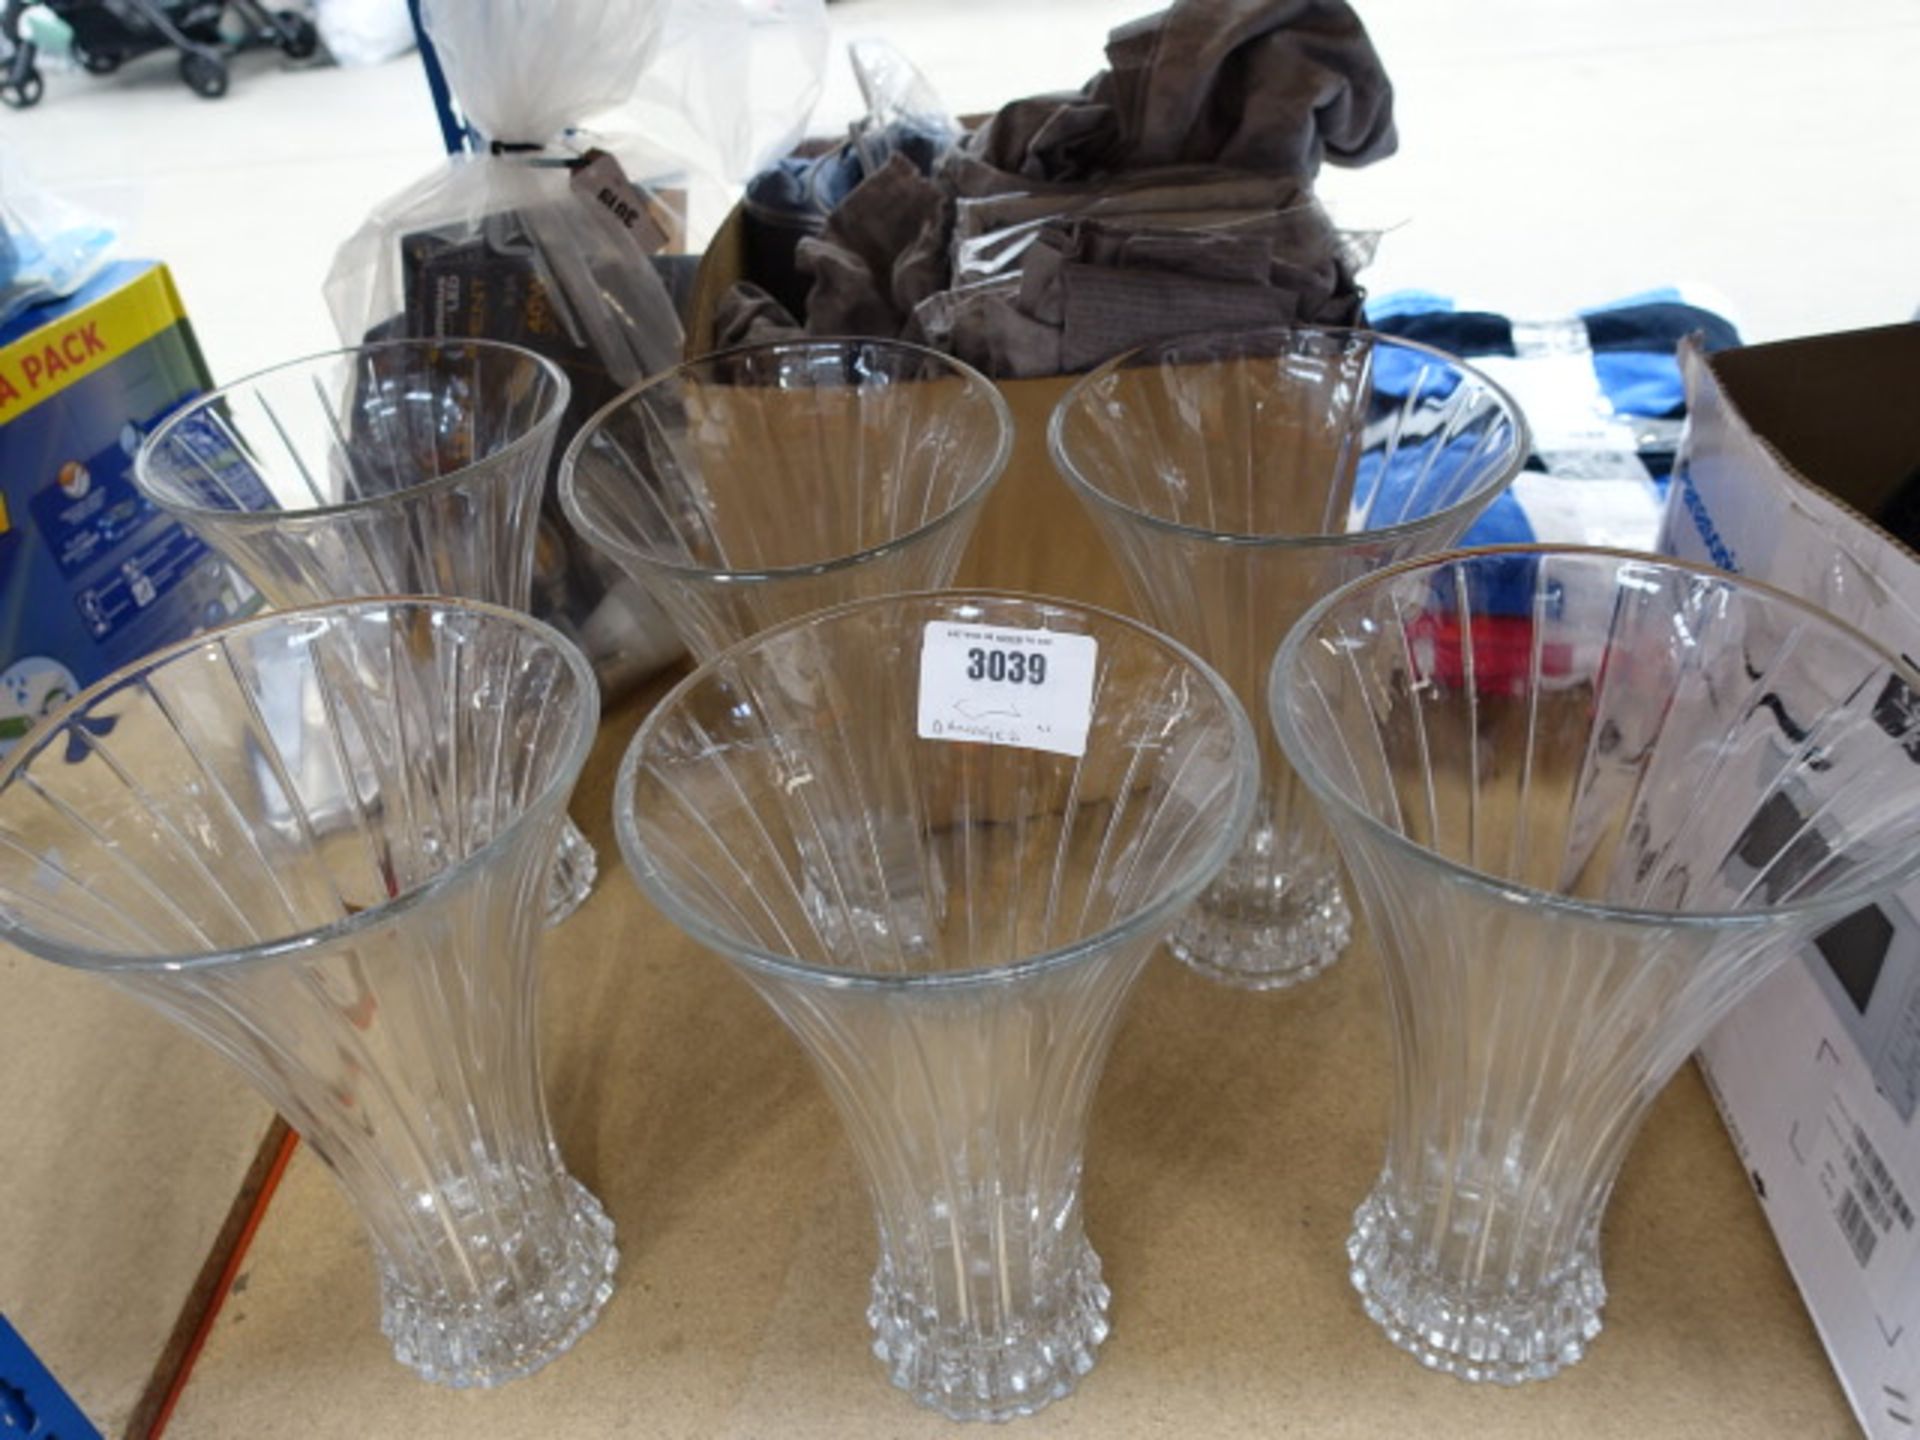 3041 - 6 damaged glass vases